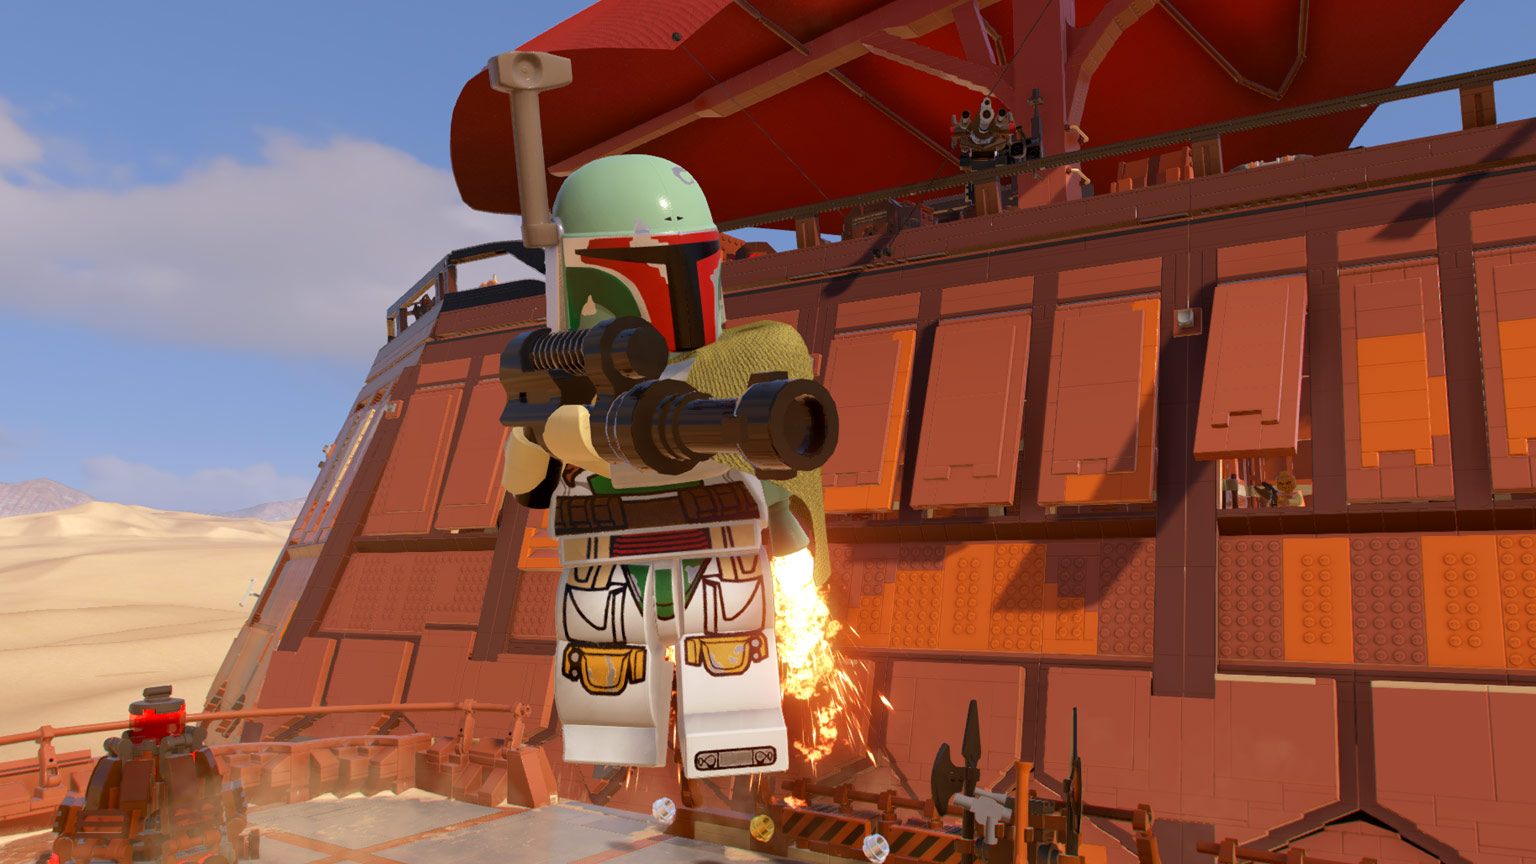 Lego Star Wars The Skywalker Saga codes – all character unlock codes